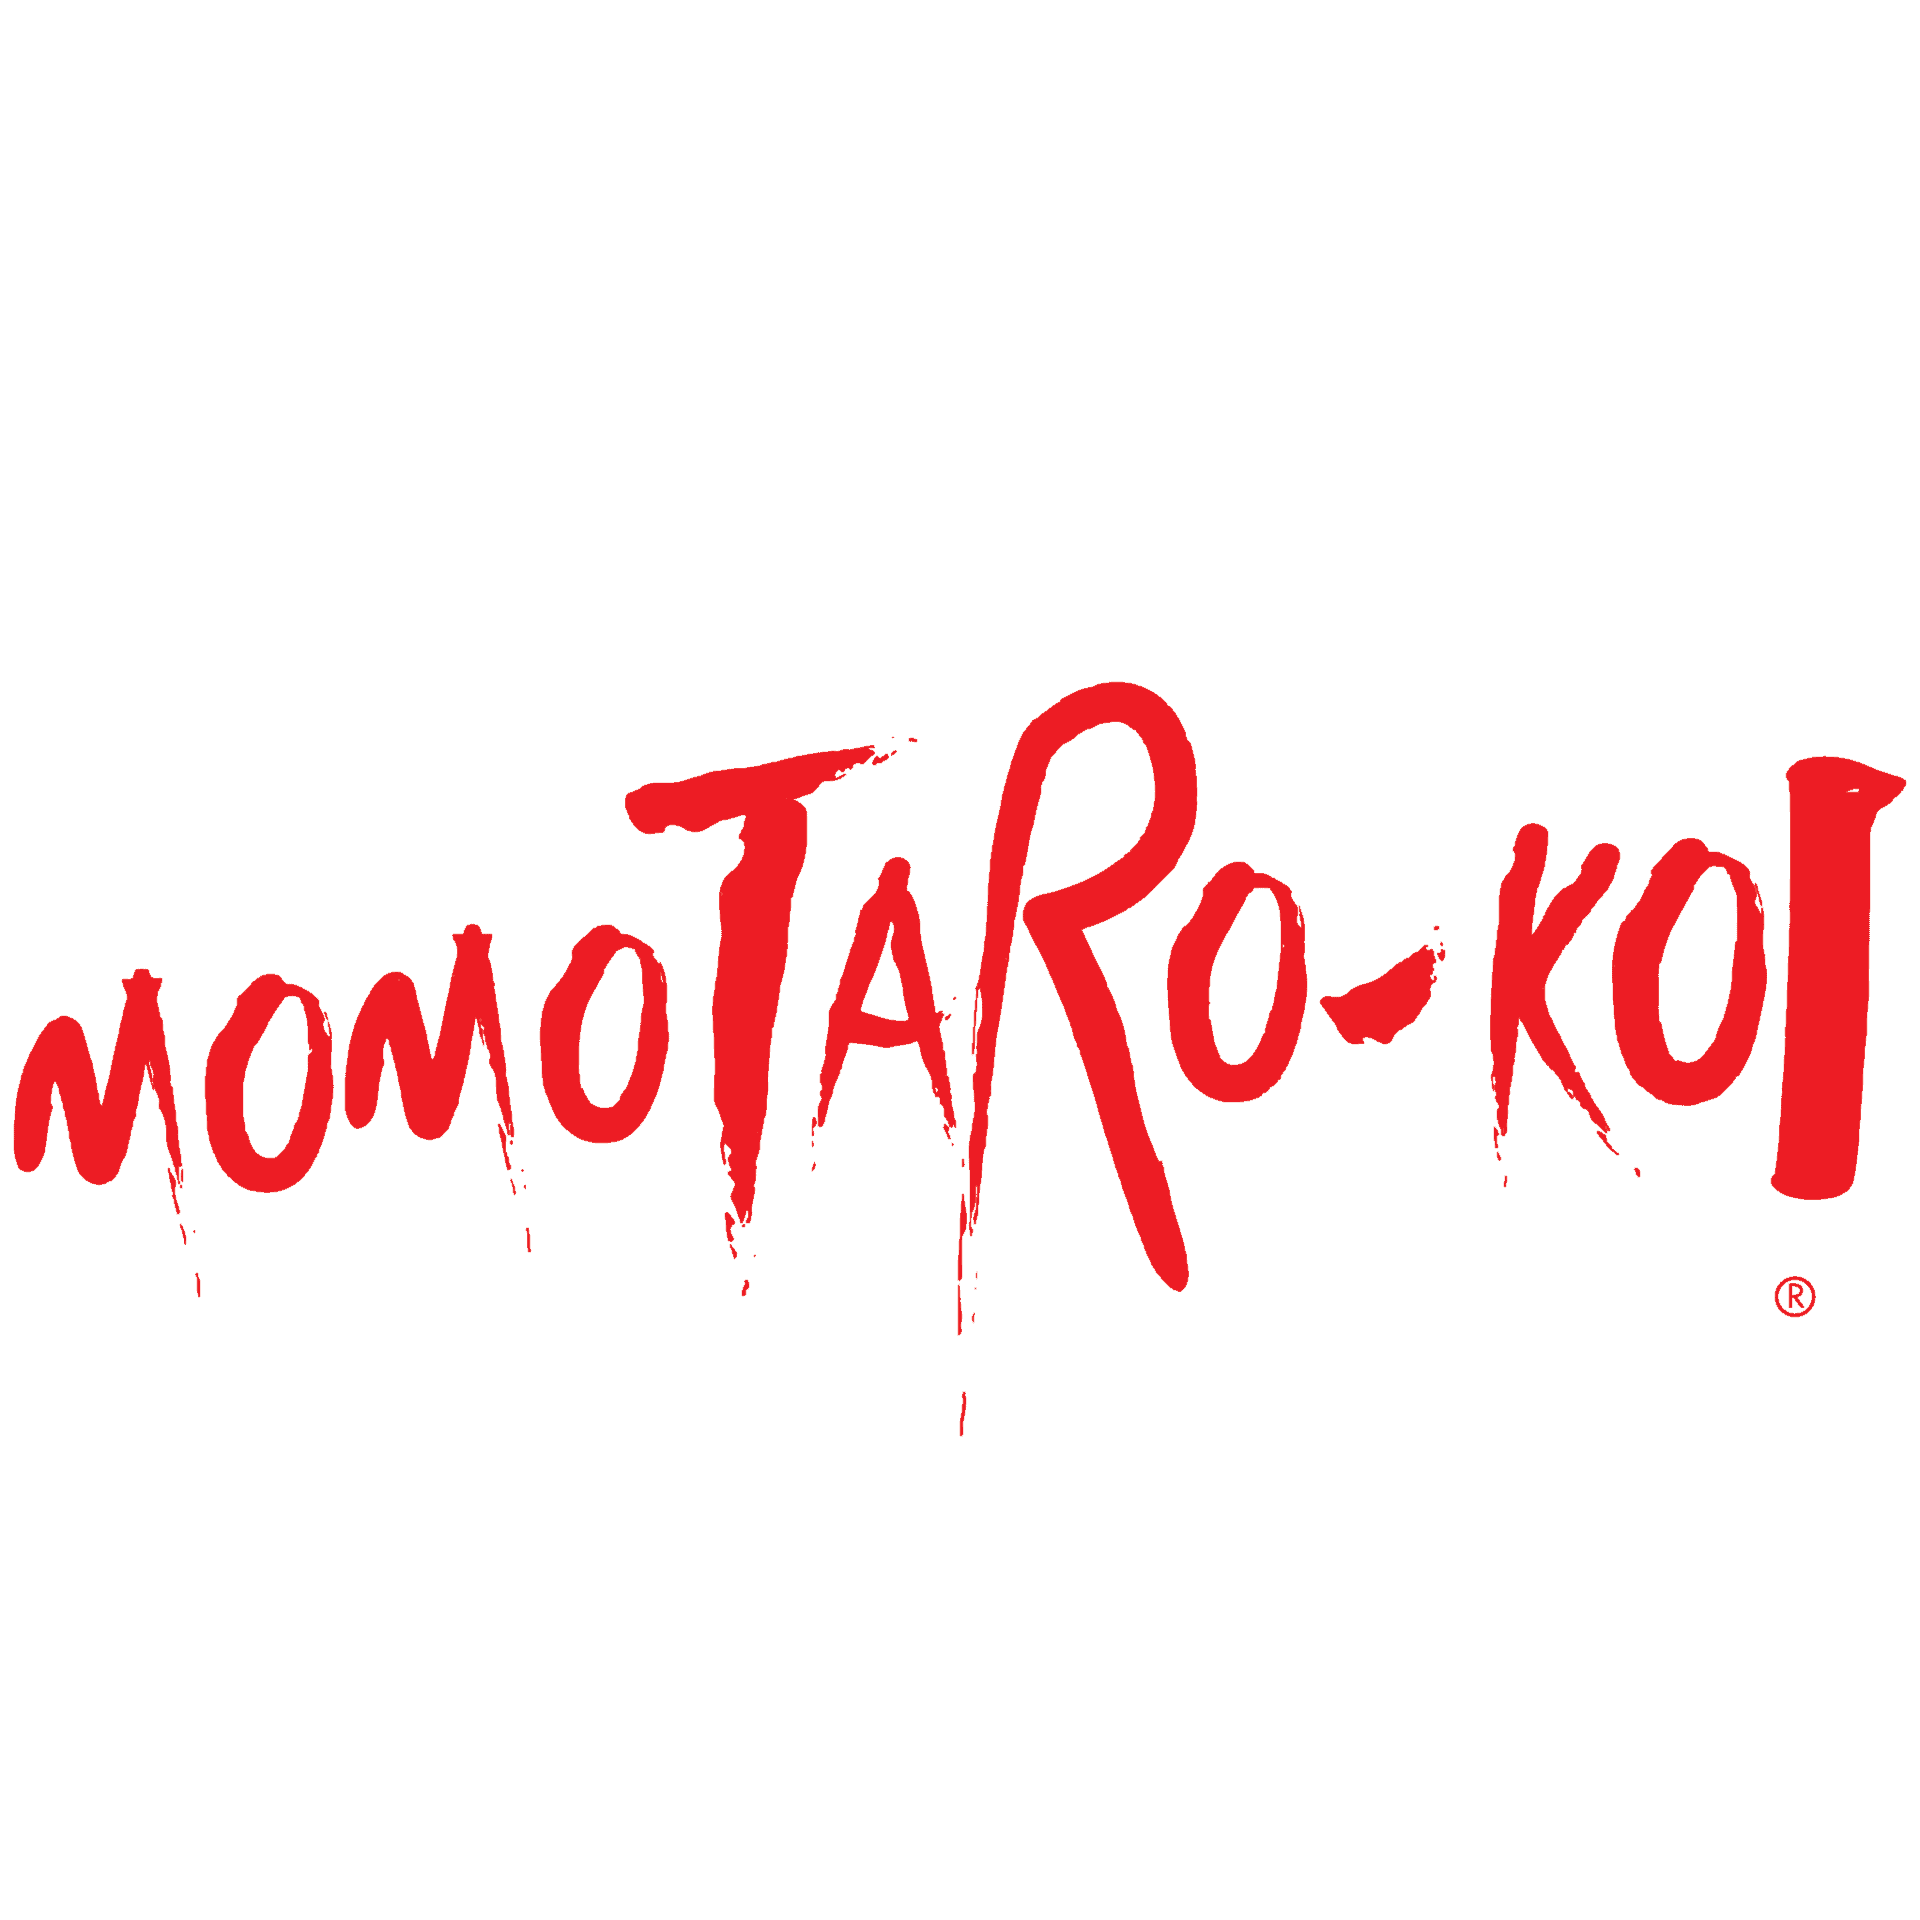 Momotaro Tag Image